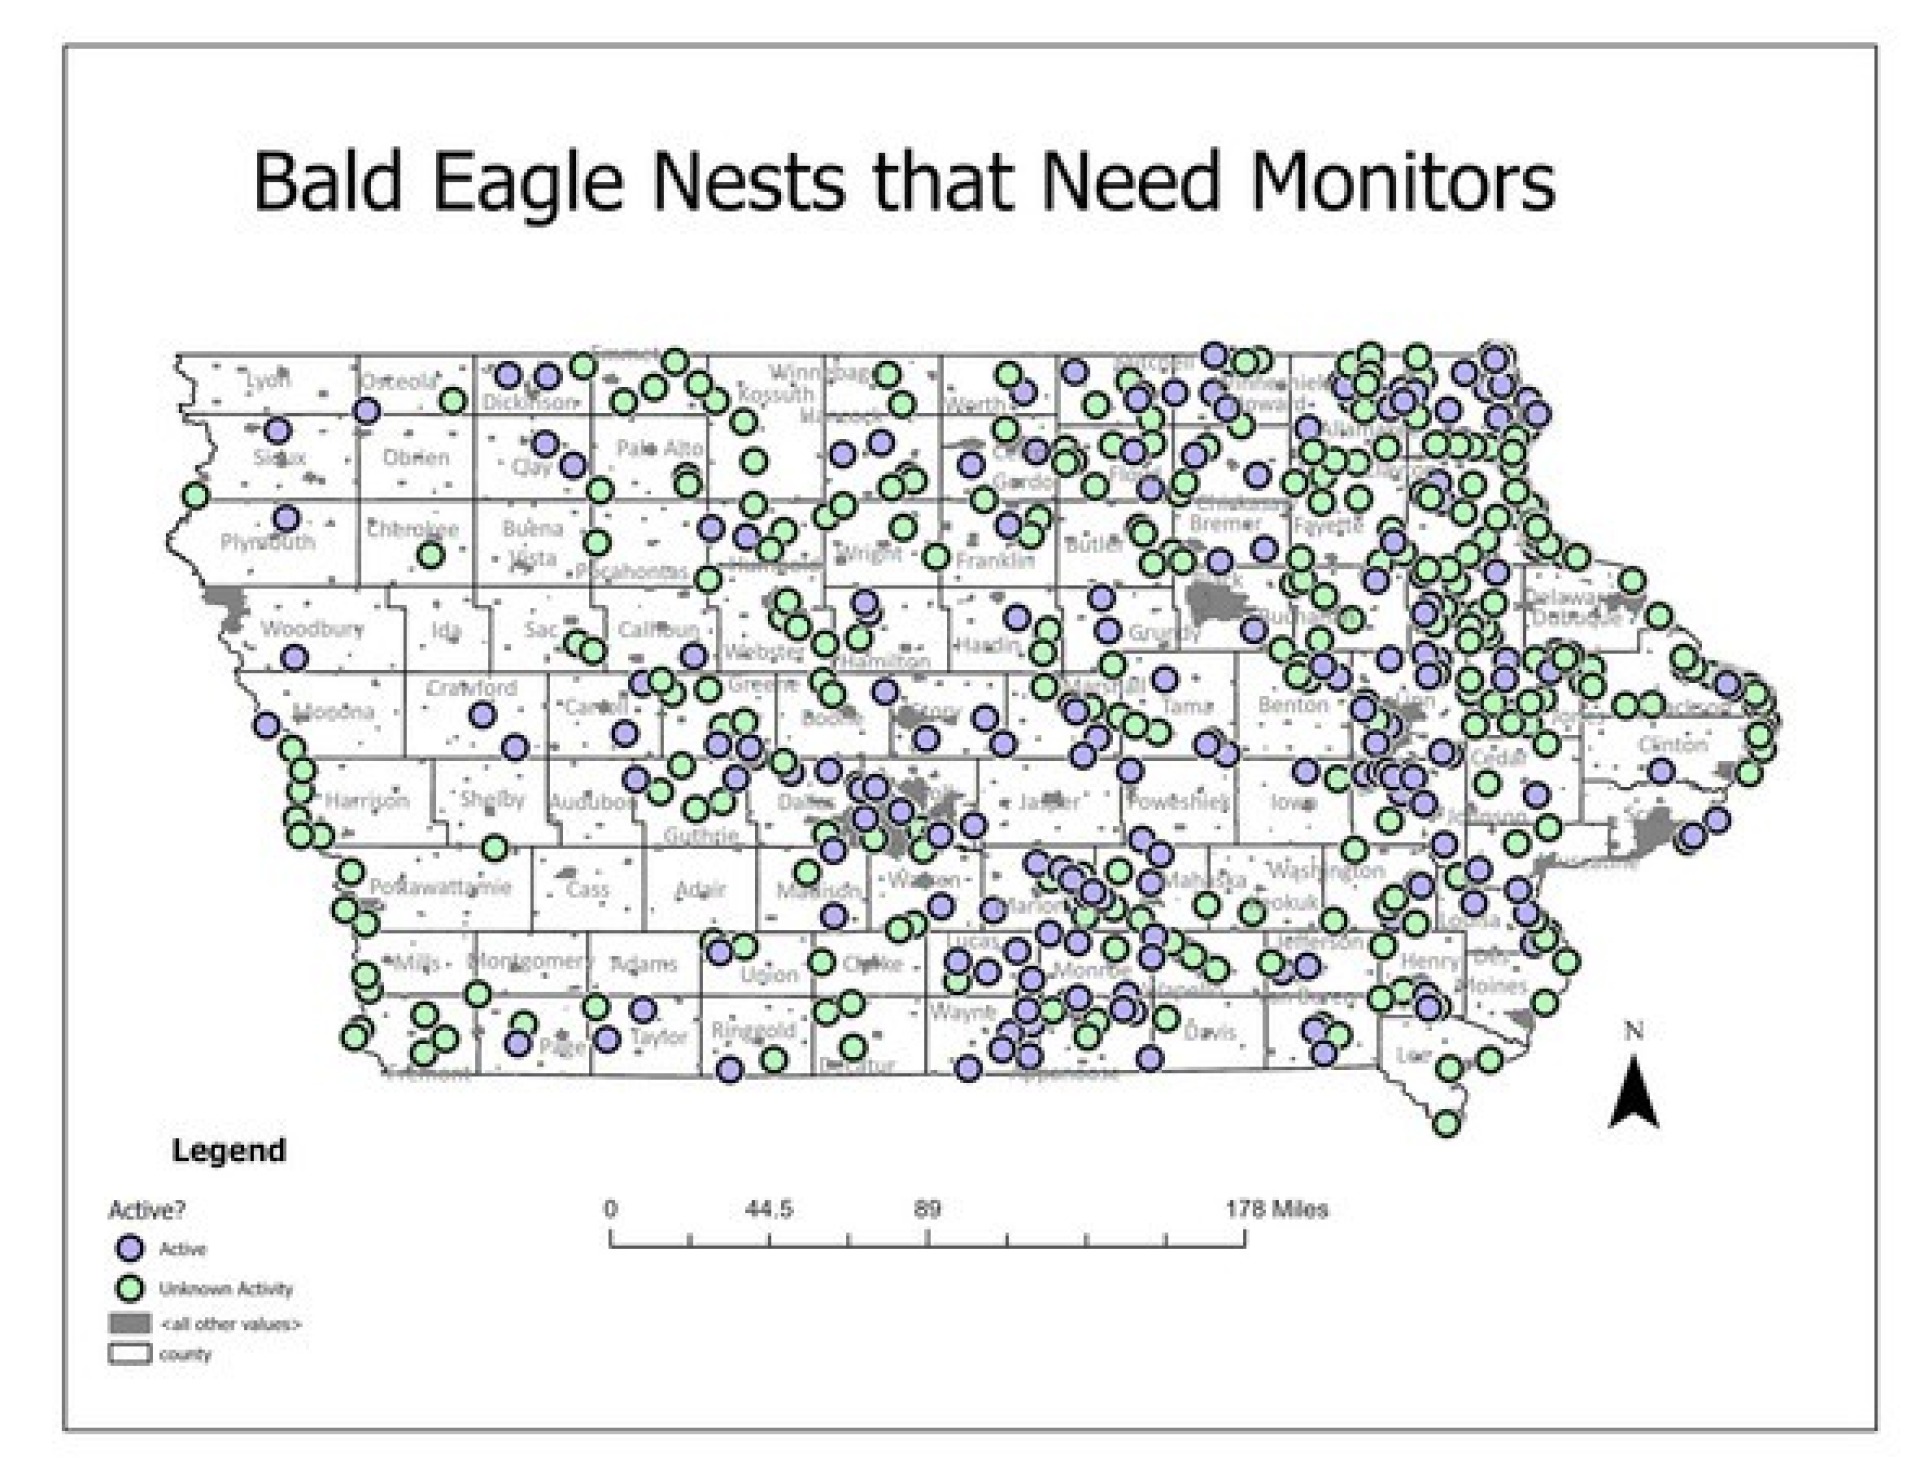 nests need monitored